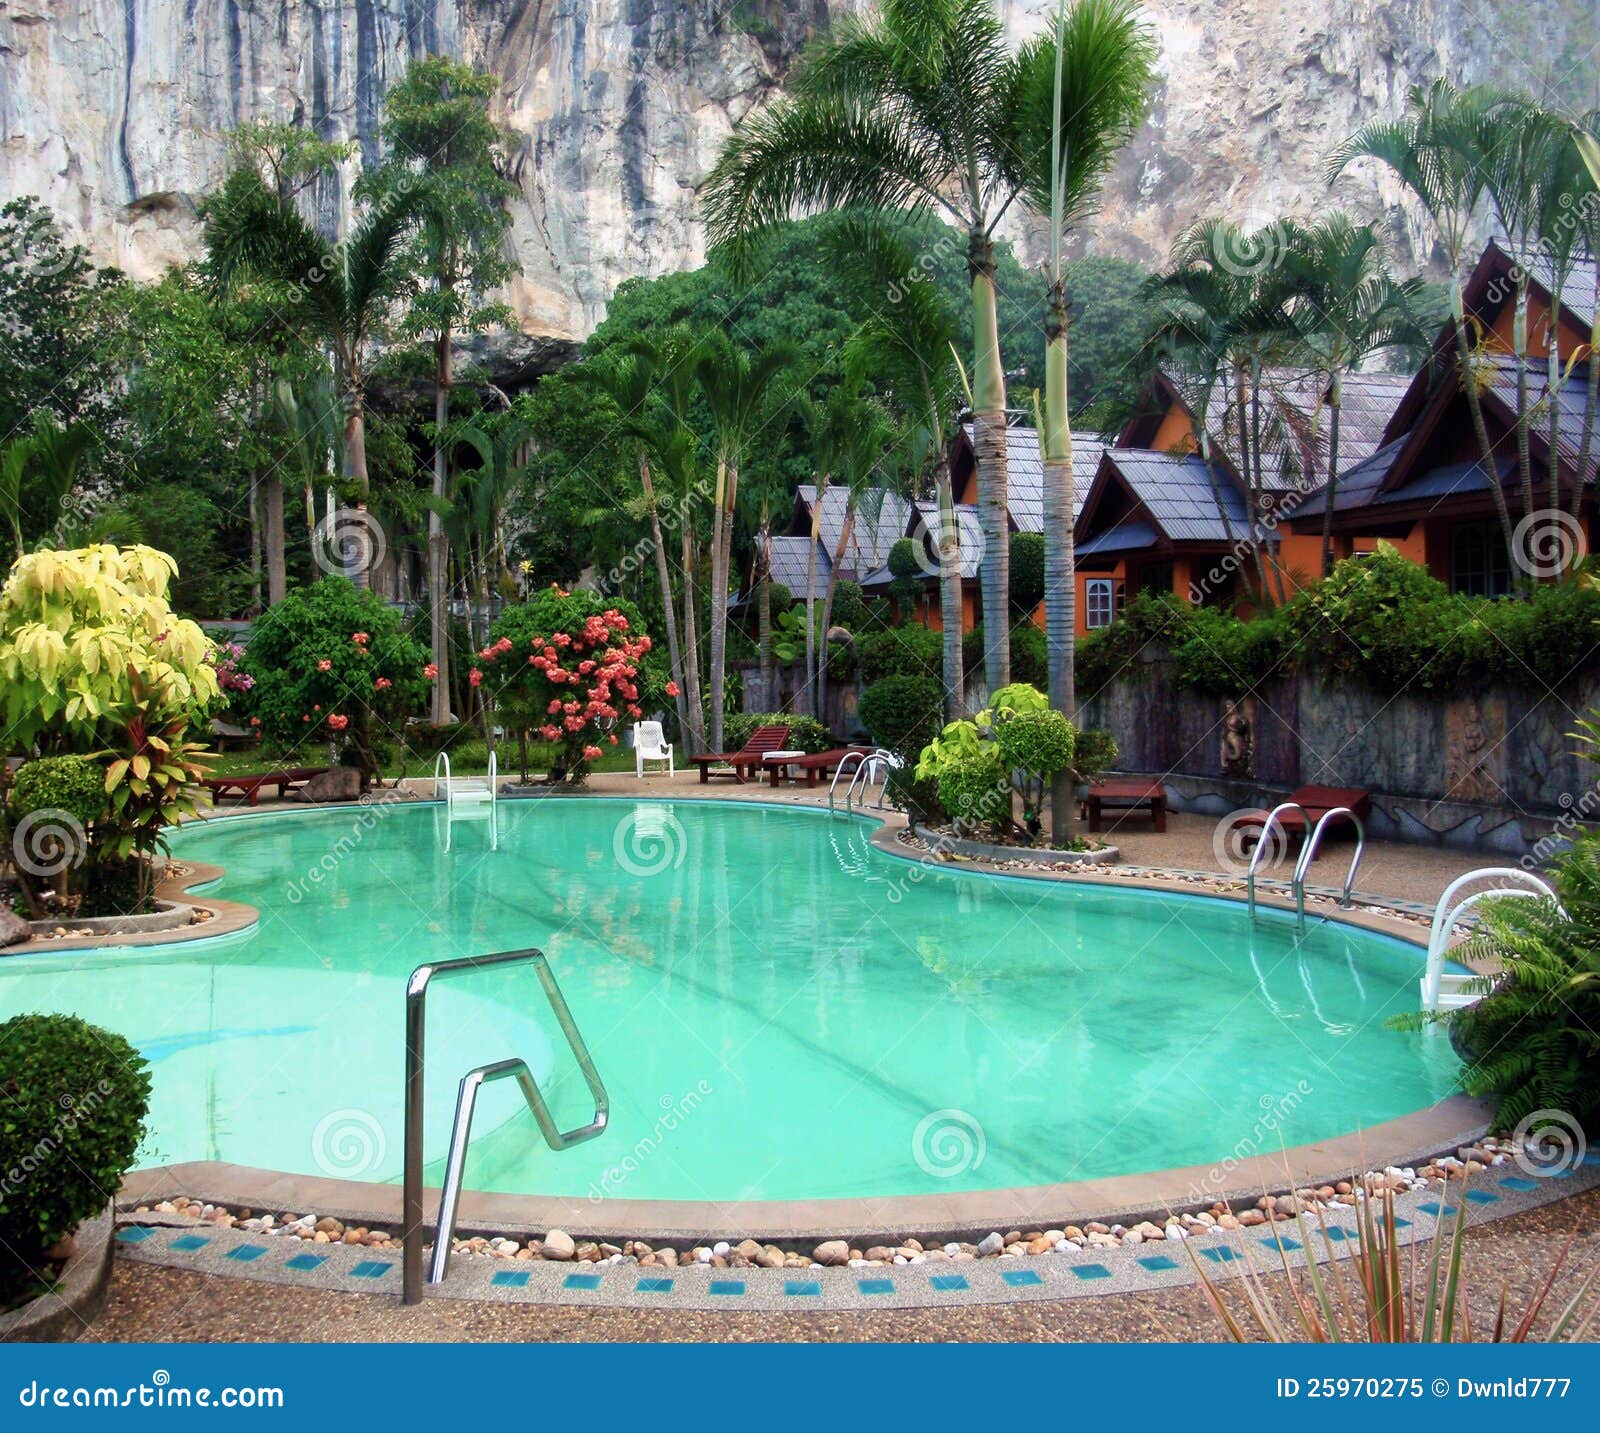 tropical resort with swiming pool